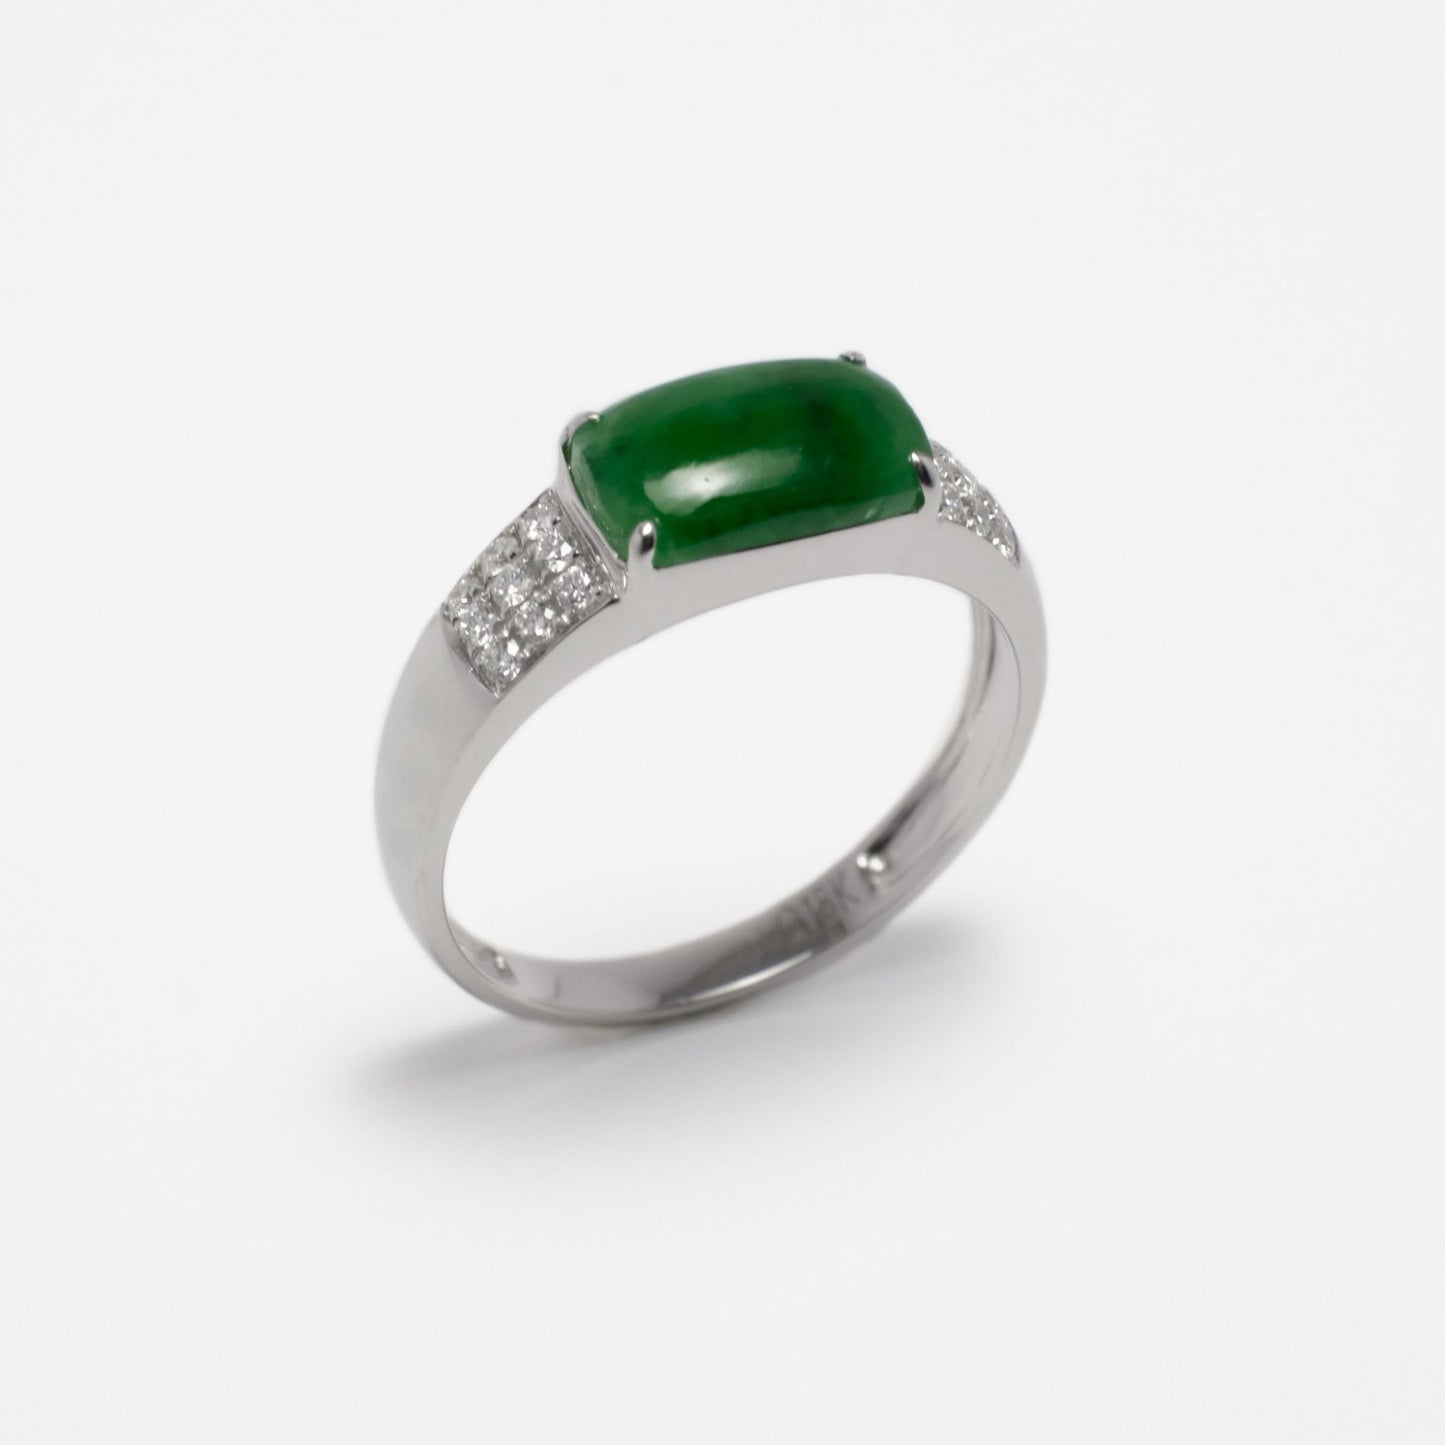 Ring - 18K白金緬甸老坑青長方曲面天然翡翠配鑽石戒指 - 雅玉珠寶